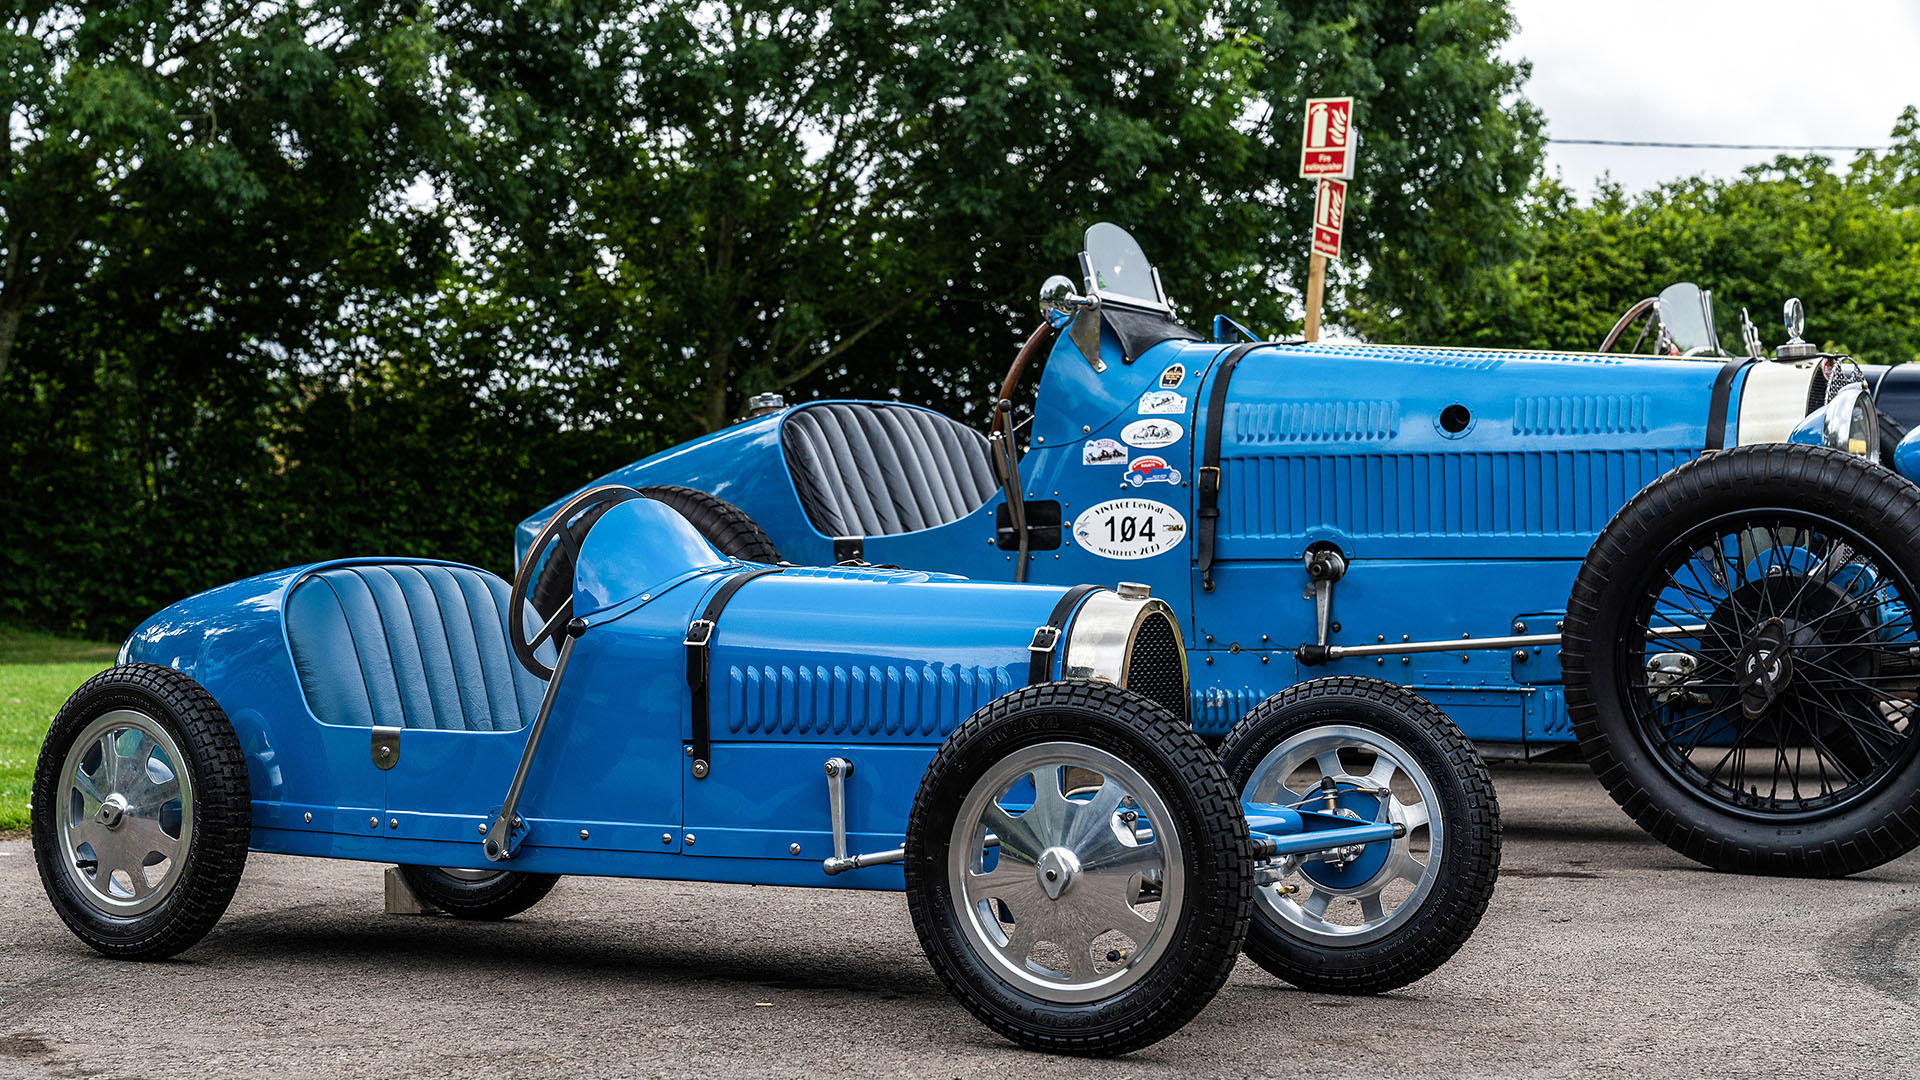 The Spiritual Home in of England Bugatti